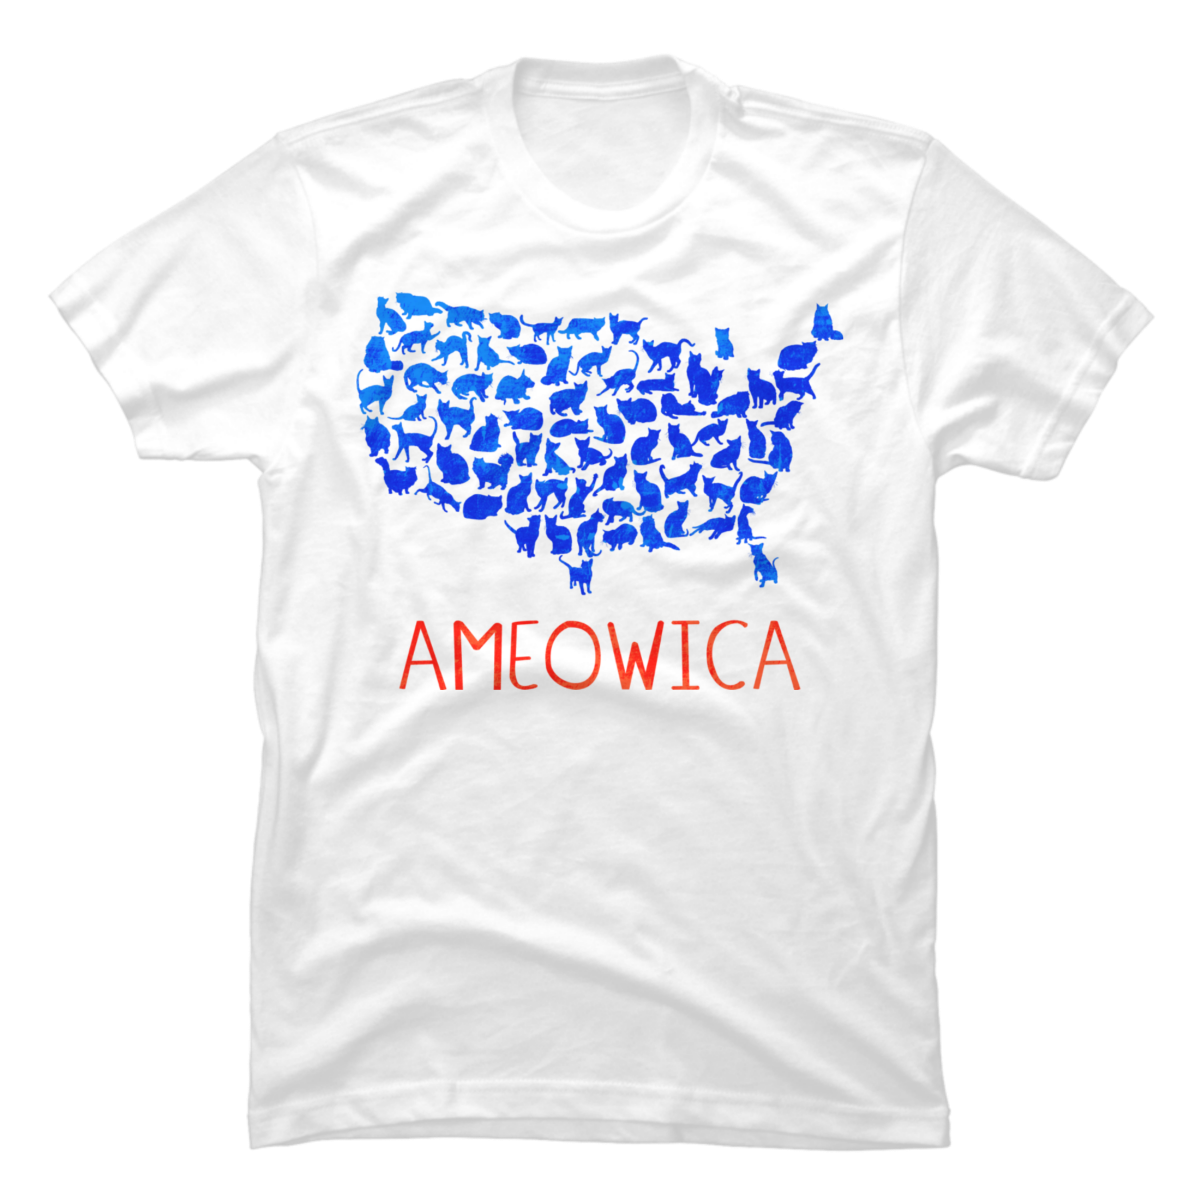 ameowica shirt